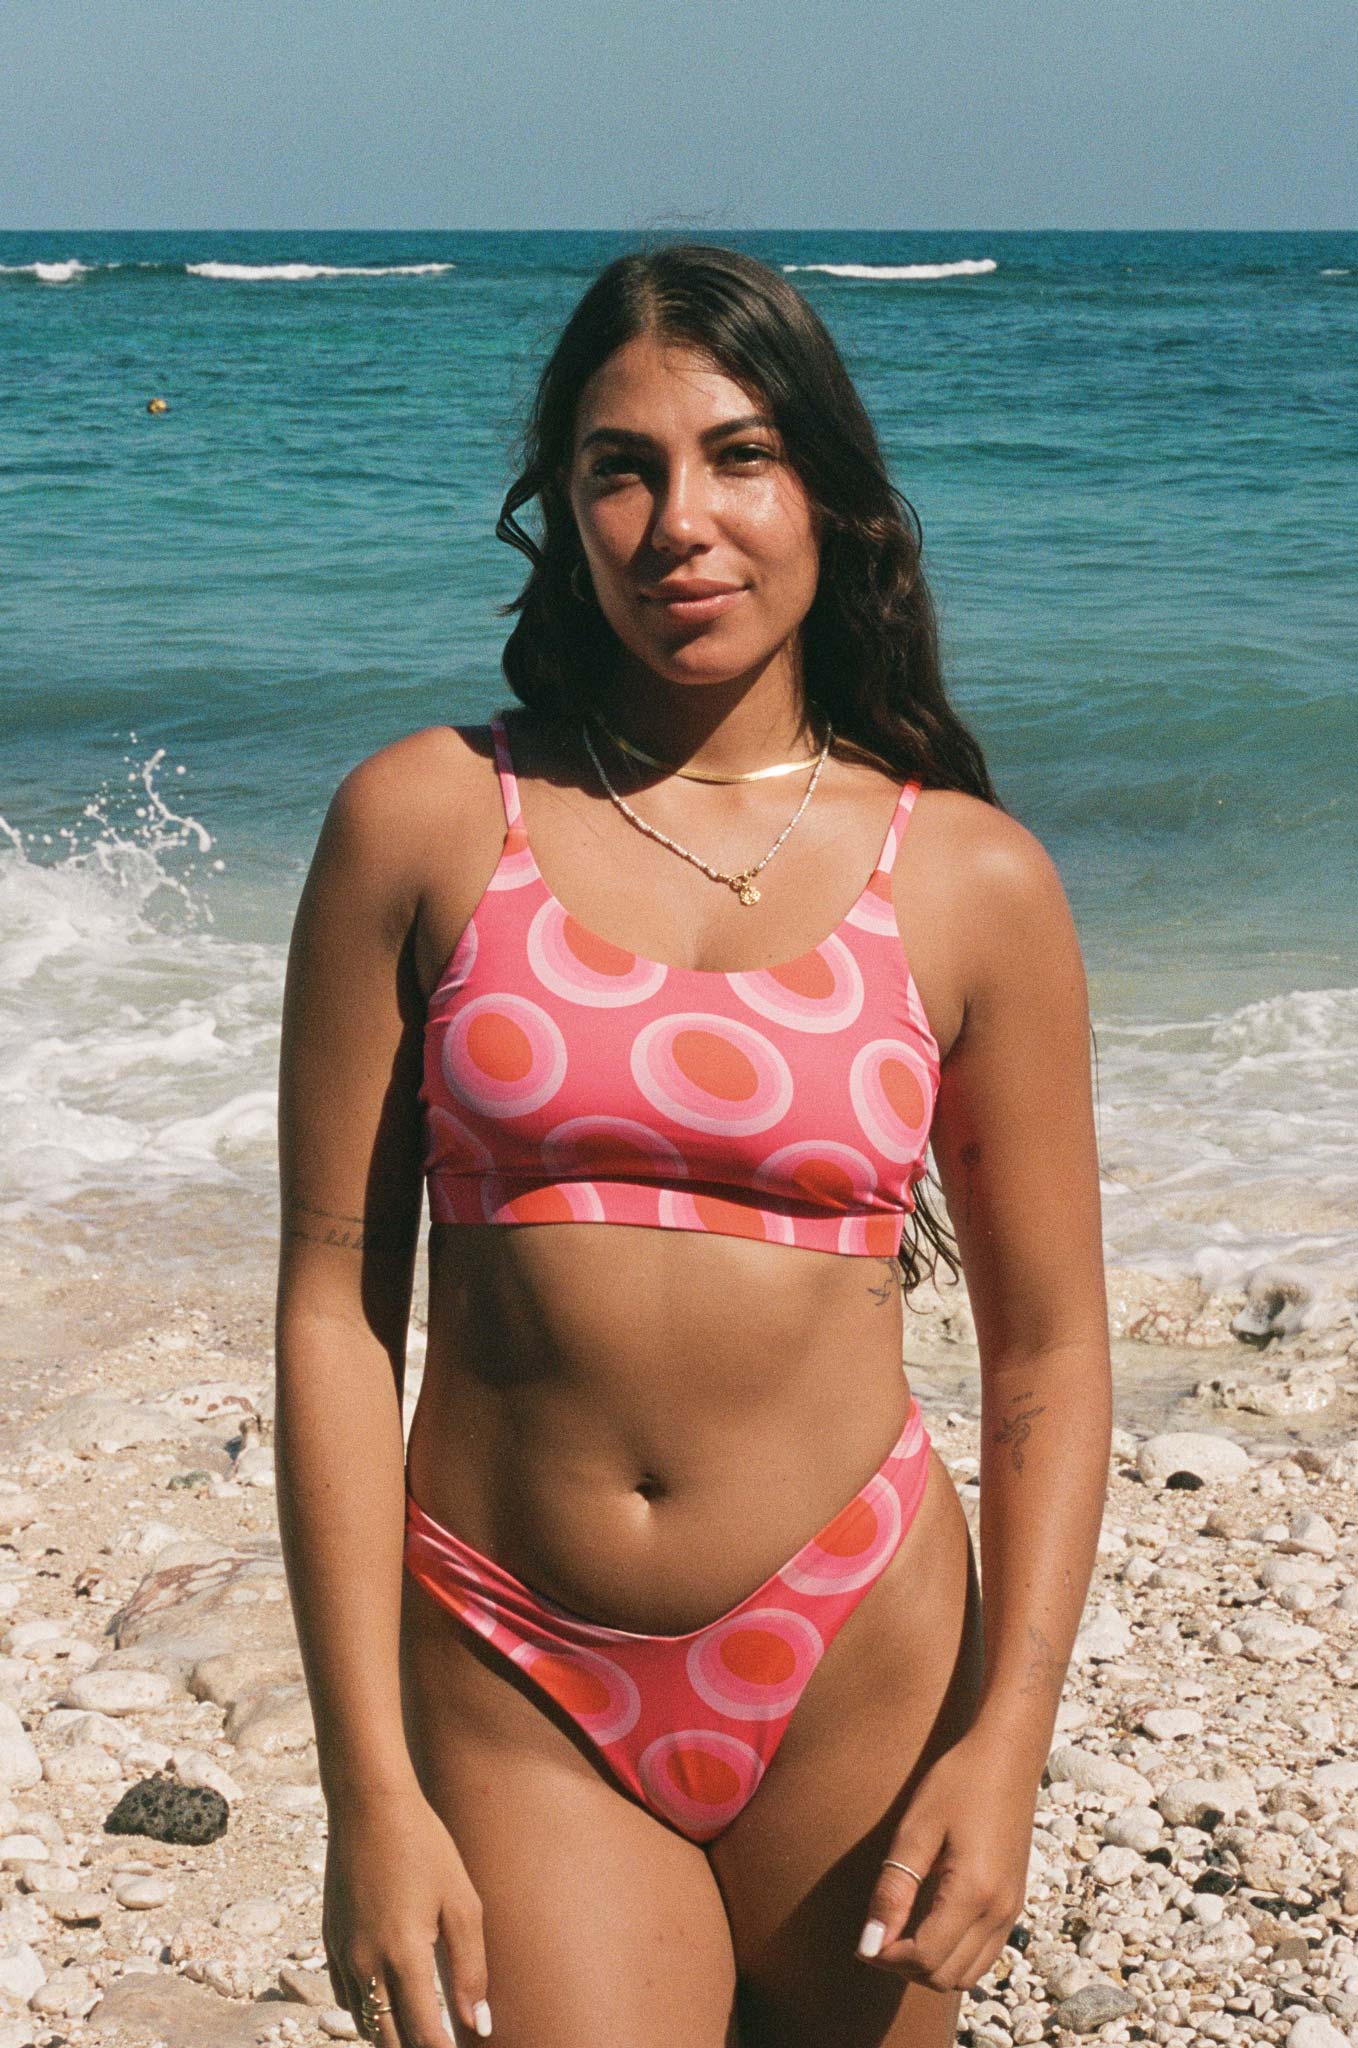 analogue photo of a model posing at the beach wearing the watermelon bikini